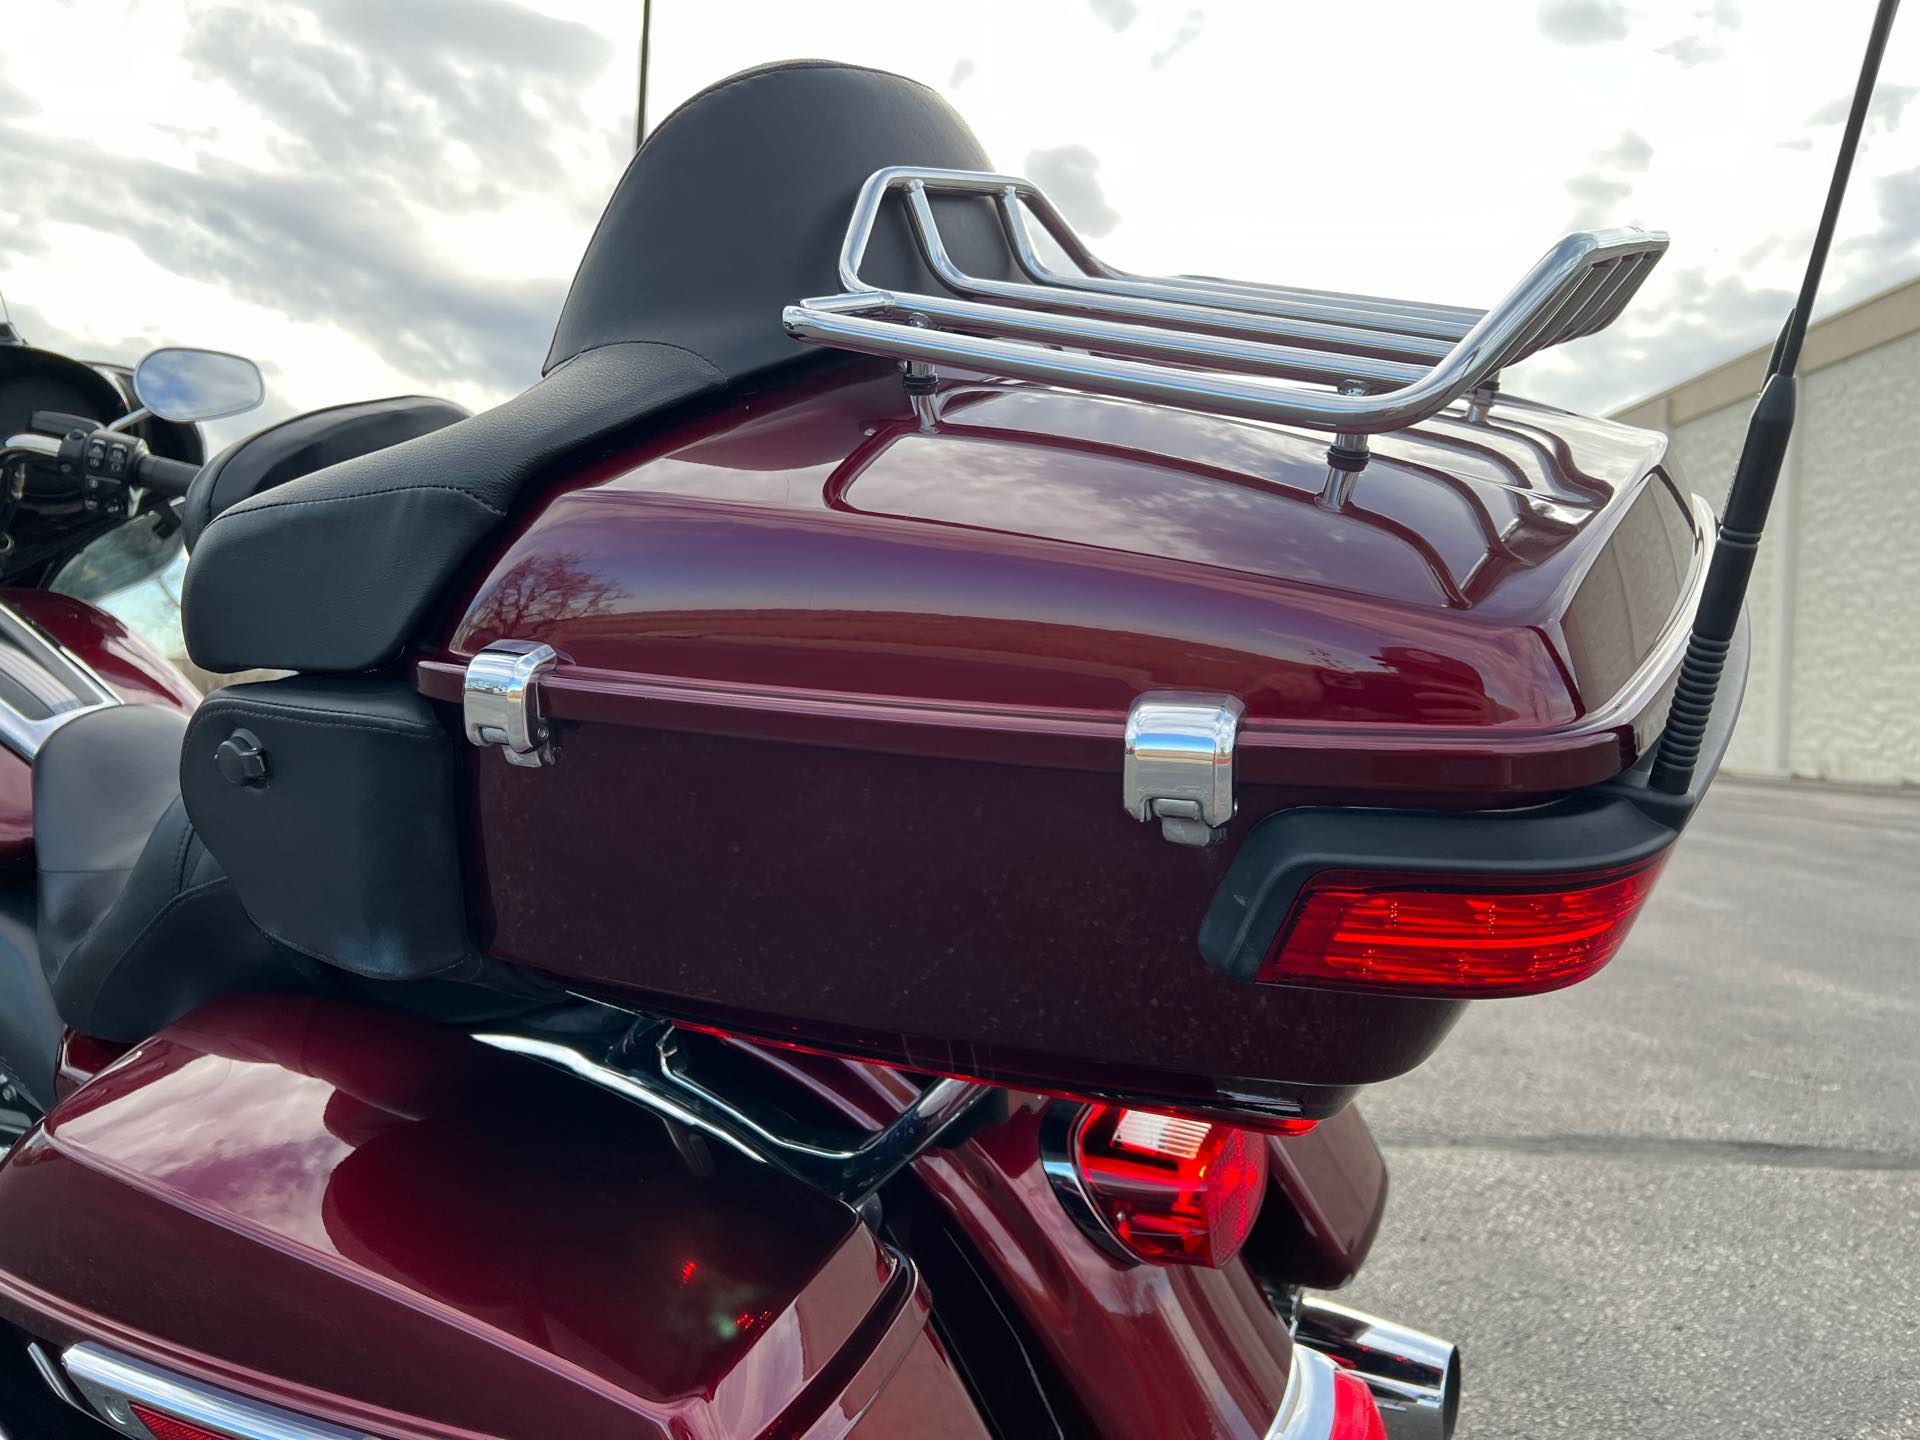 2014 Harley-Davidson Electra Glide Ultra Limited at Mount Rushmore Motorsports